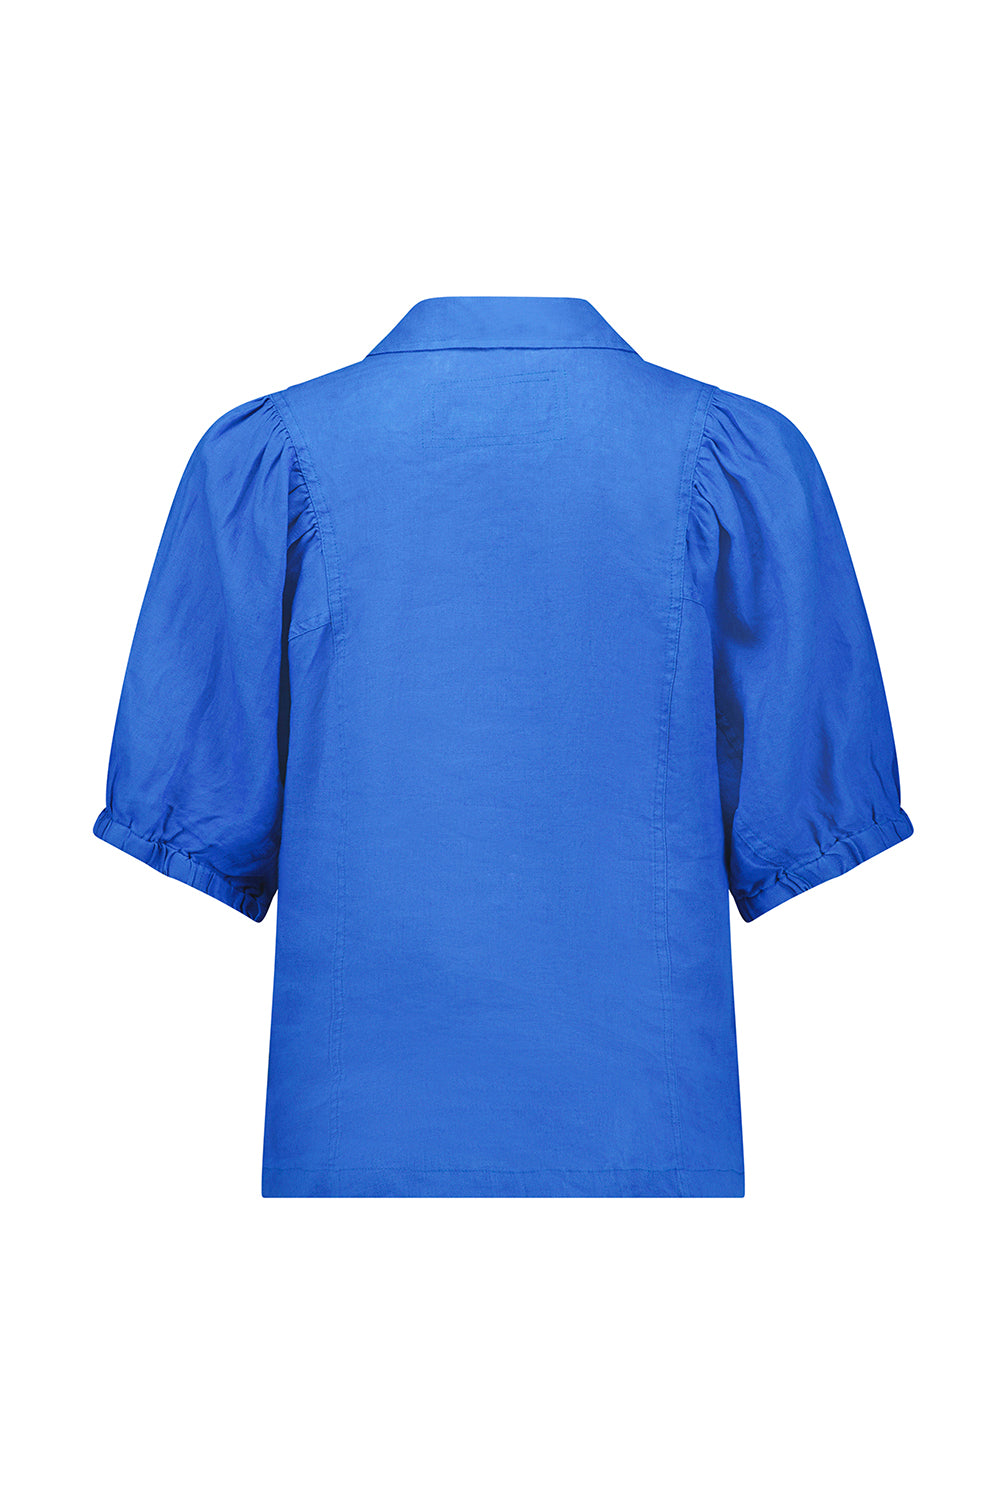 Adorn Shirt - Cobalt - VERGE